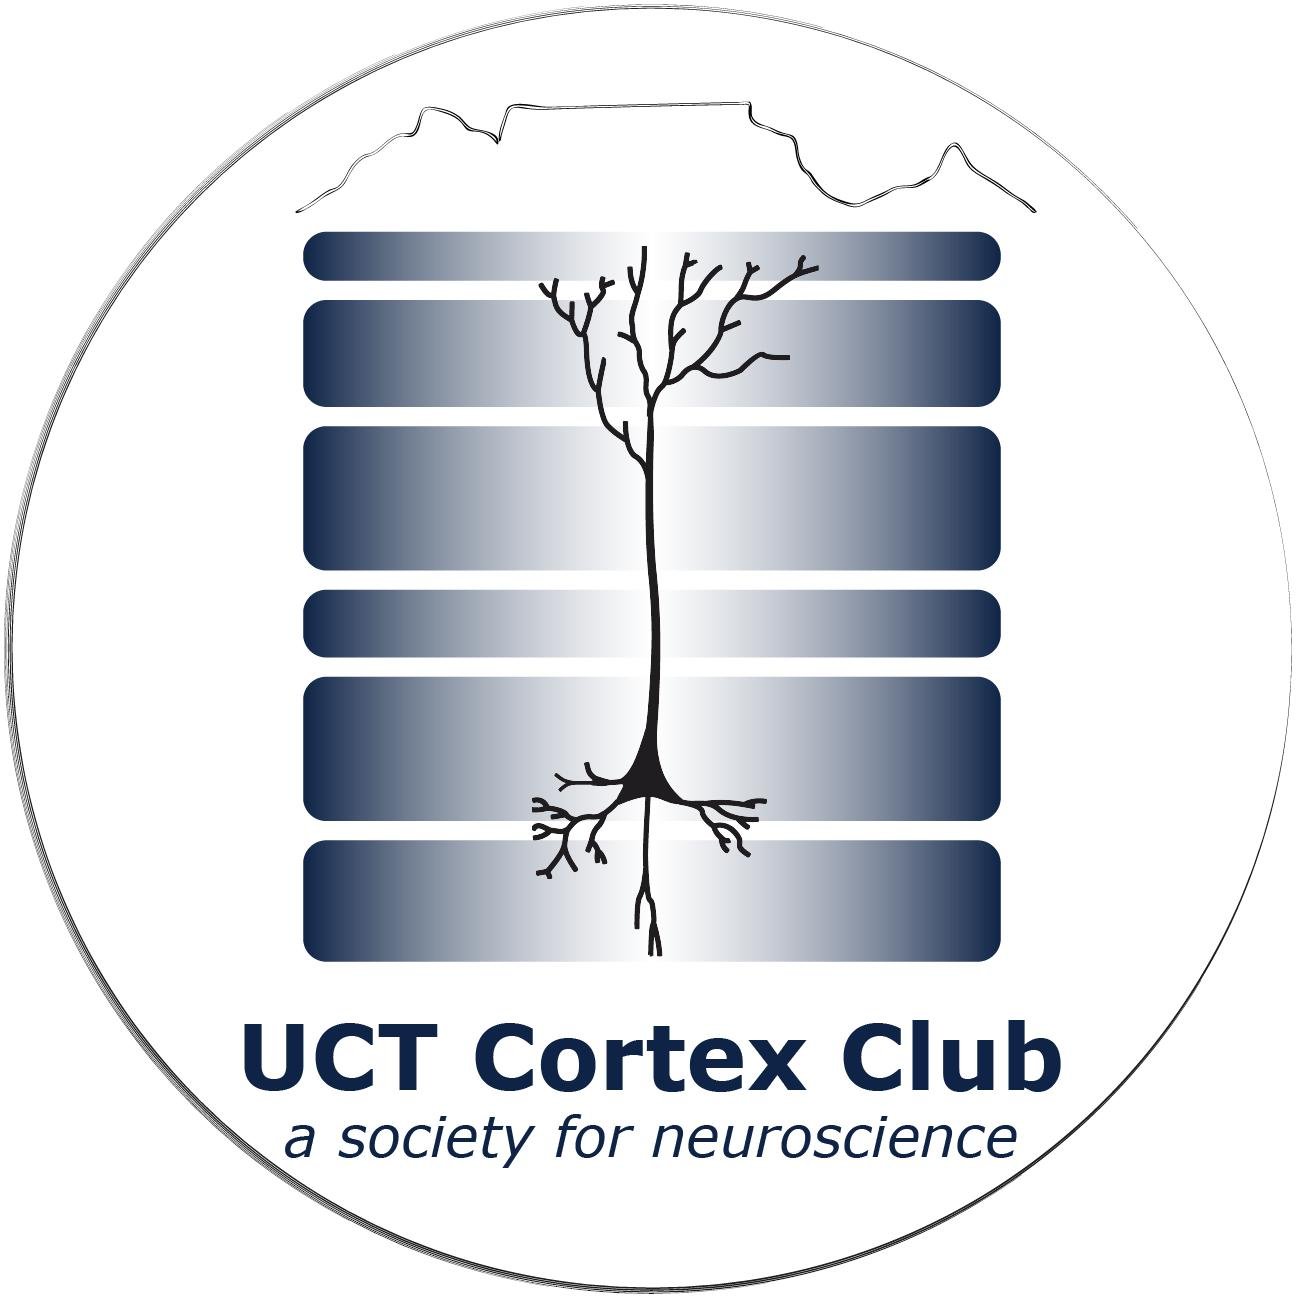 UCT Cortex Club